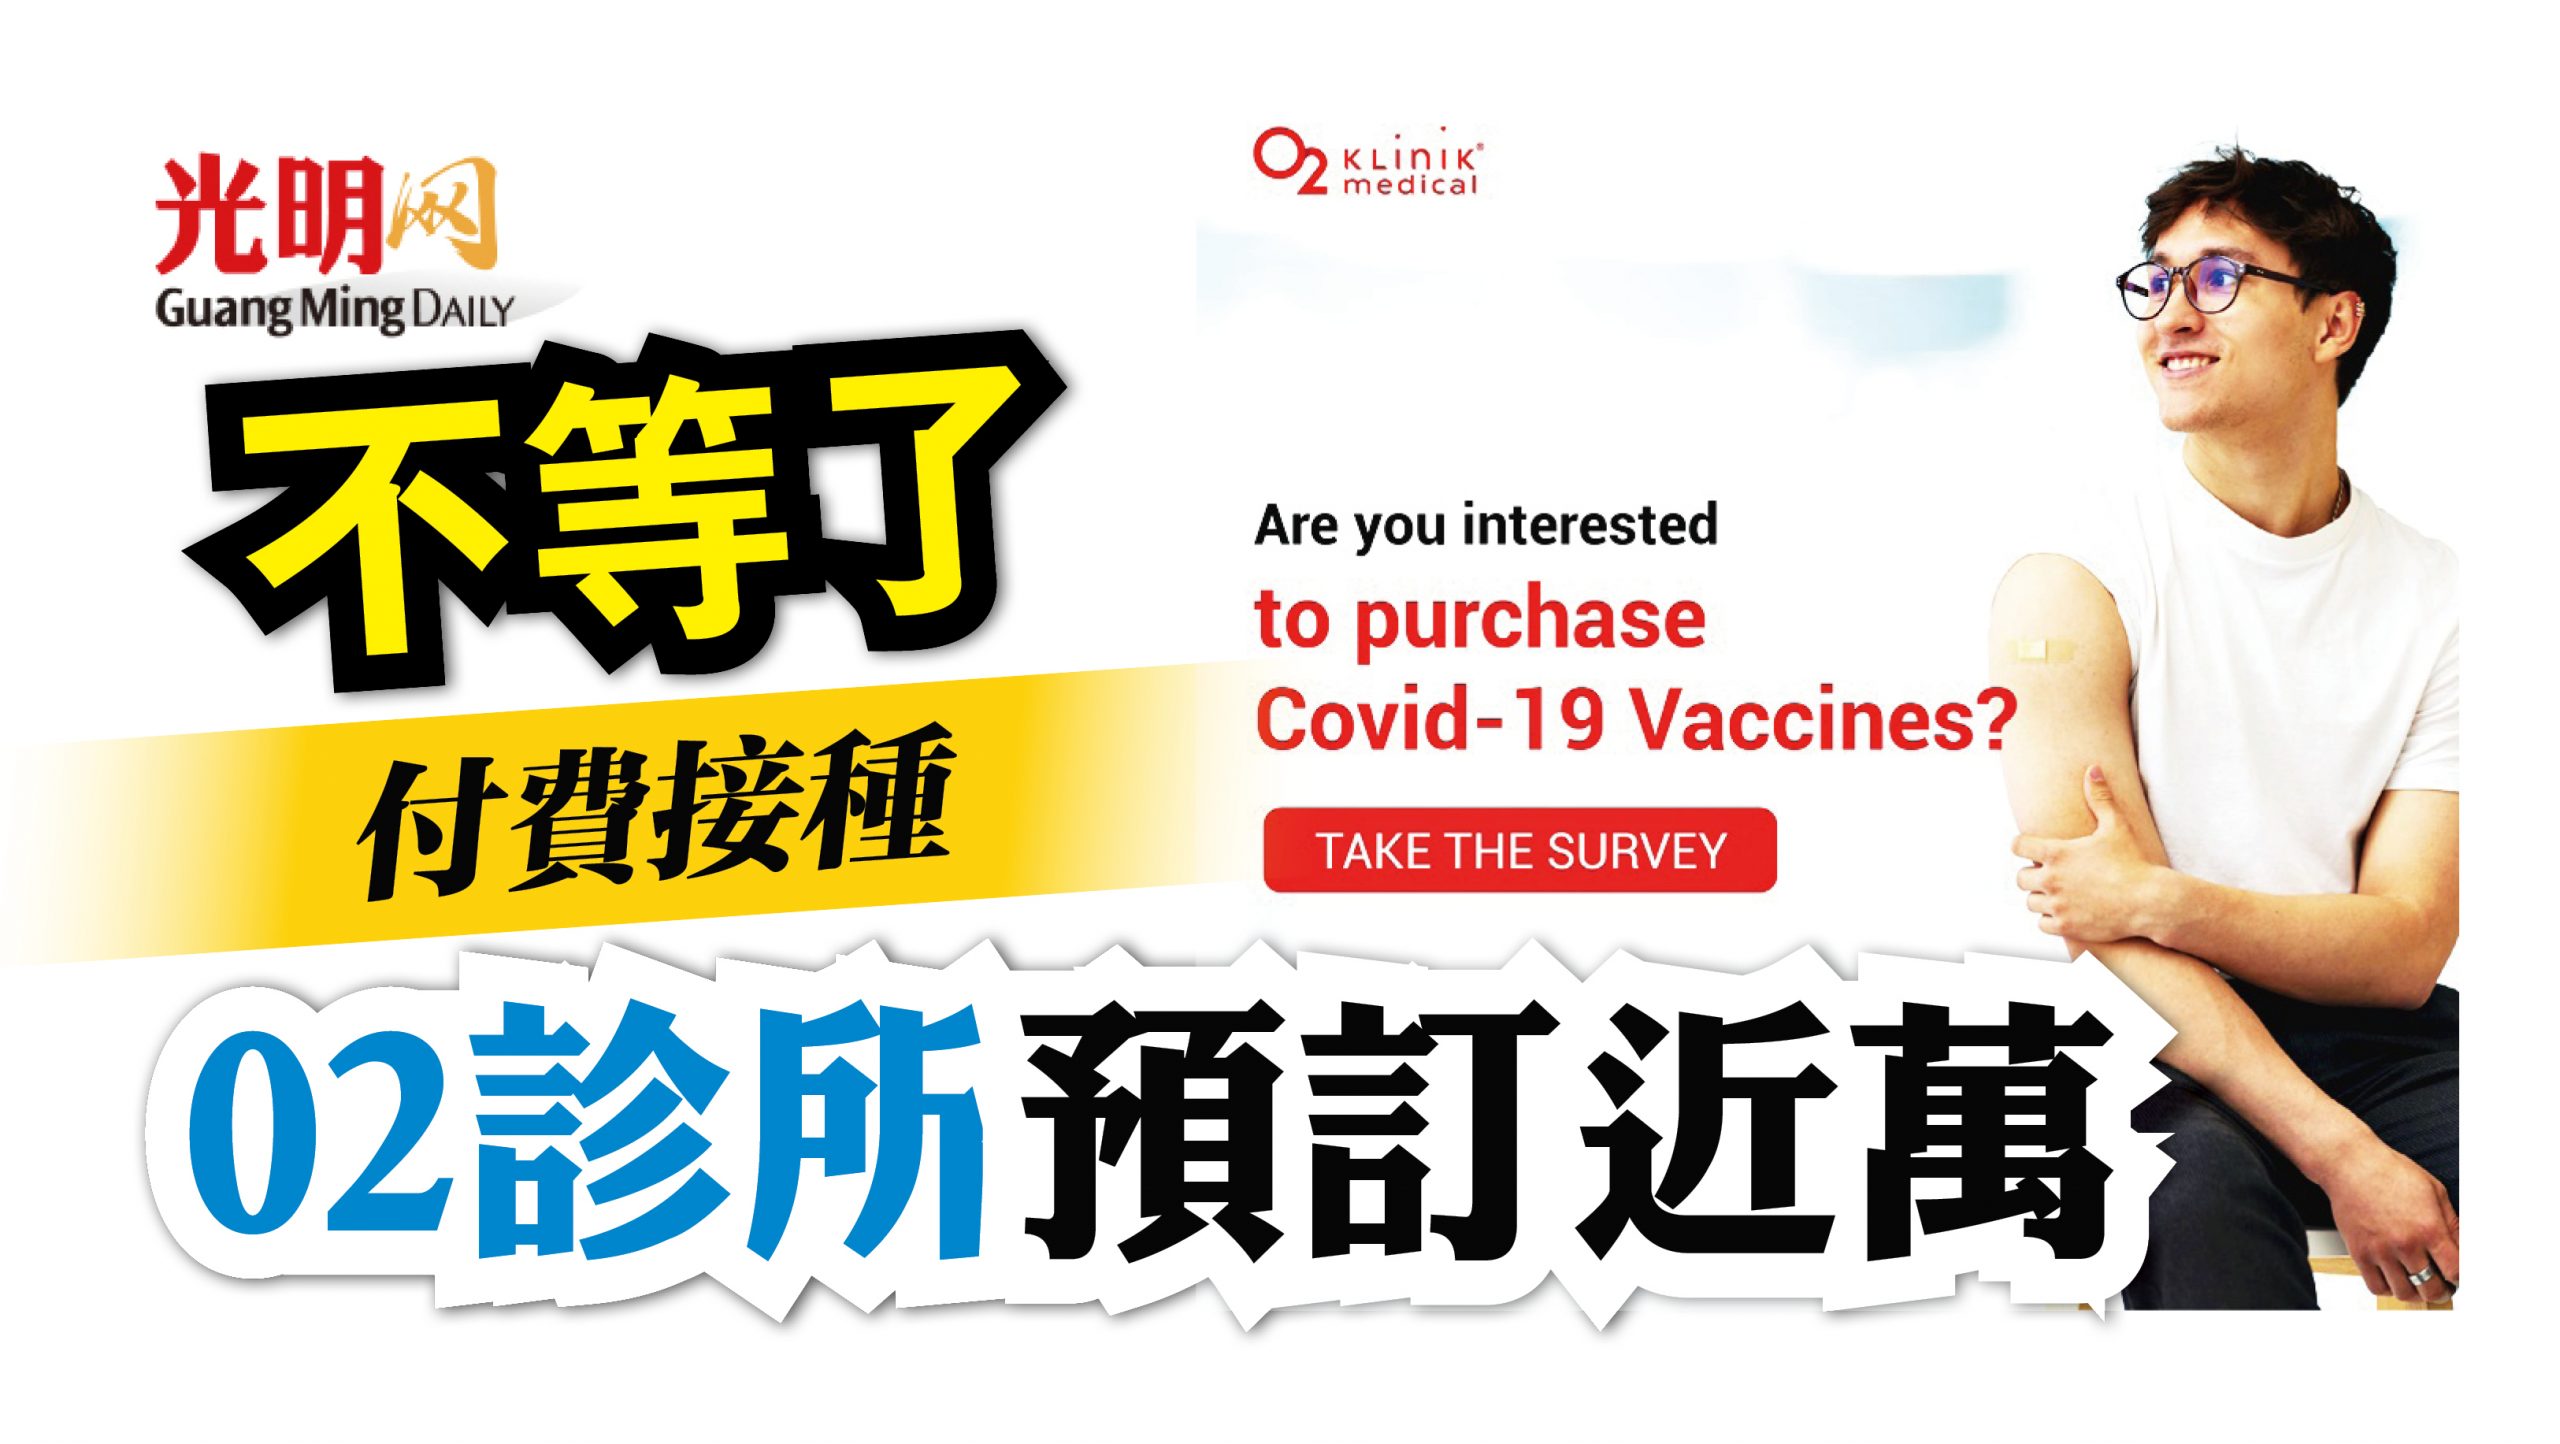 O2 klinik covid vaccine